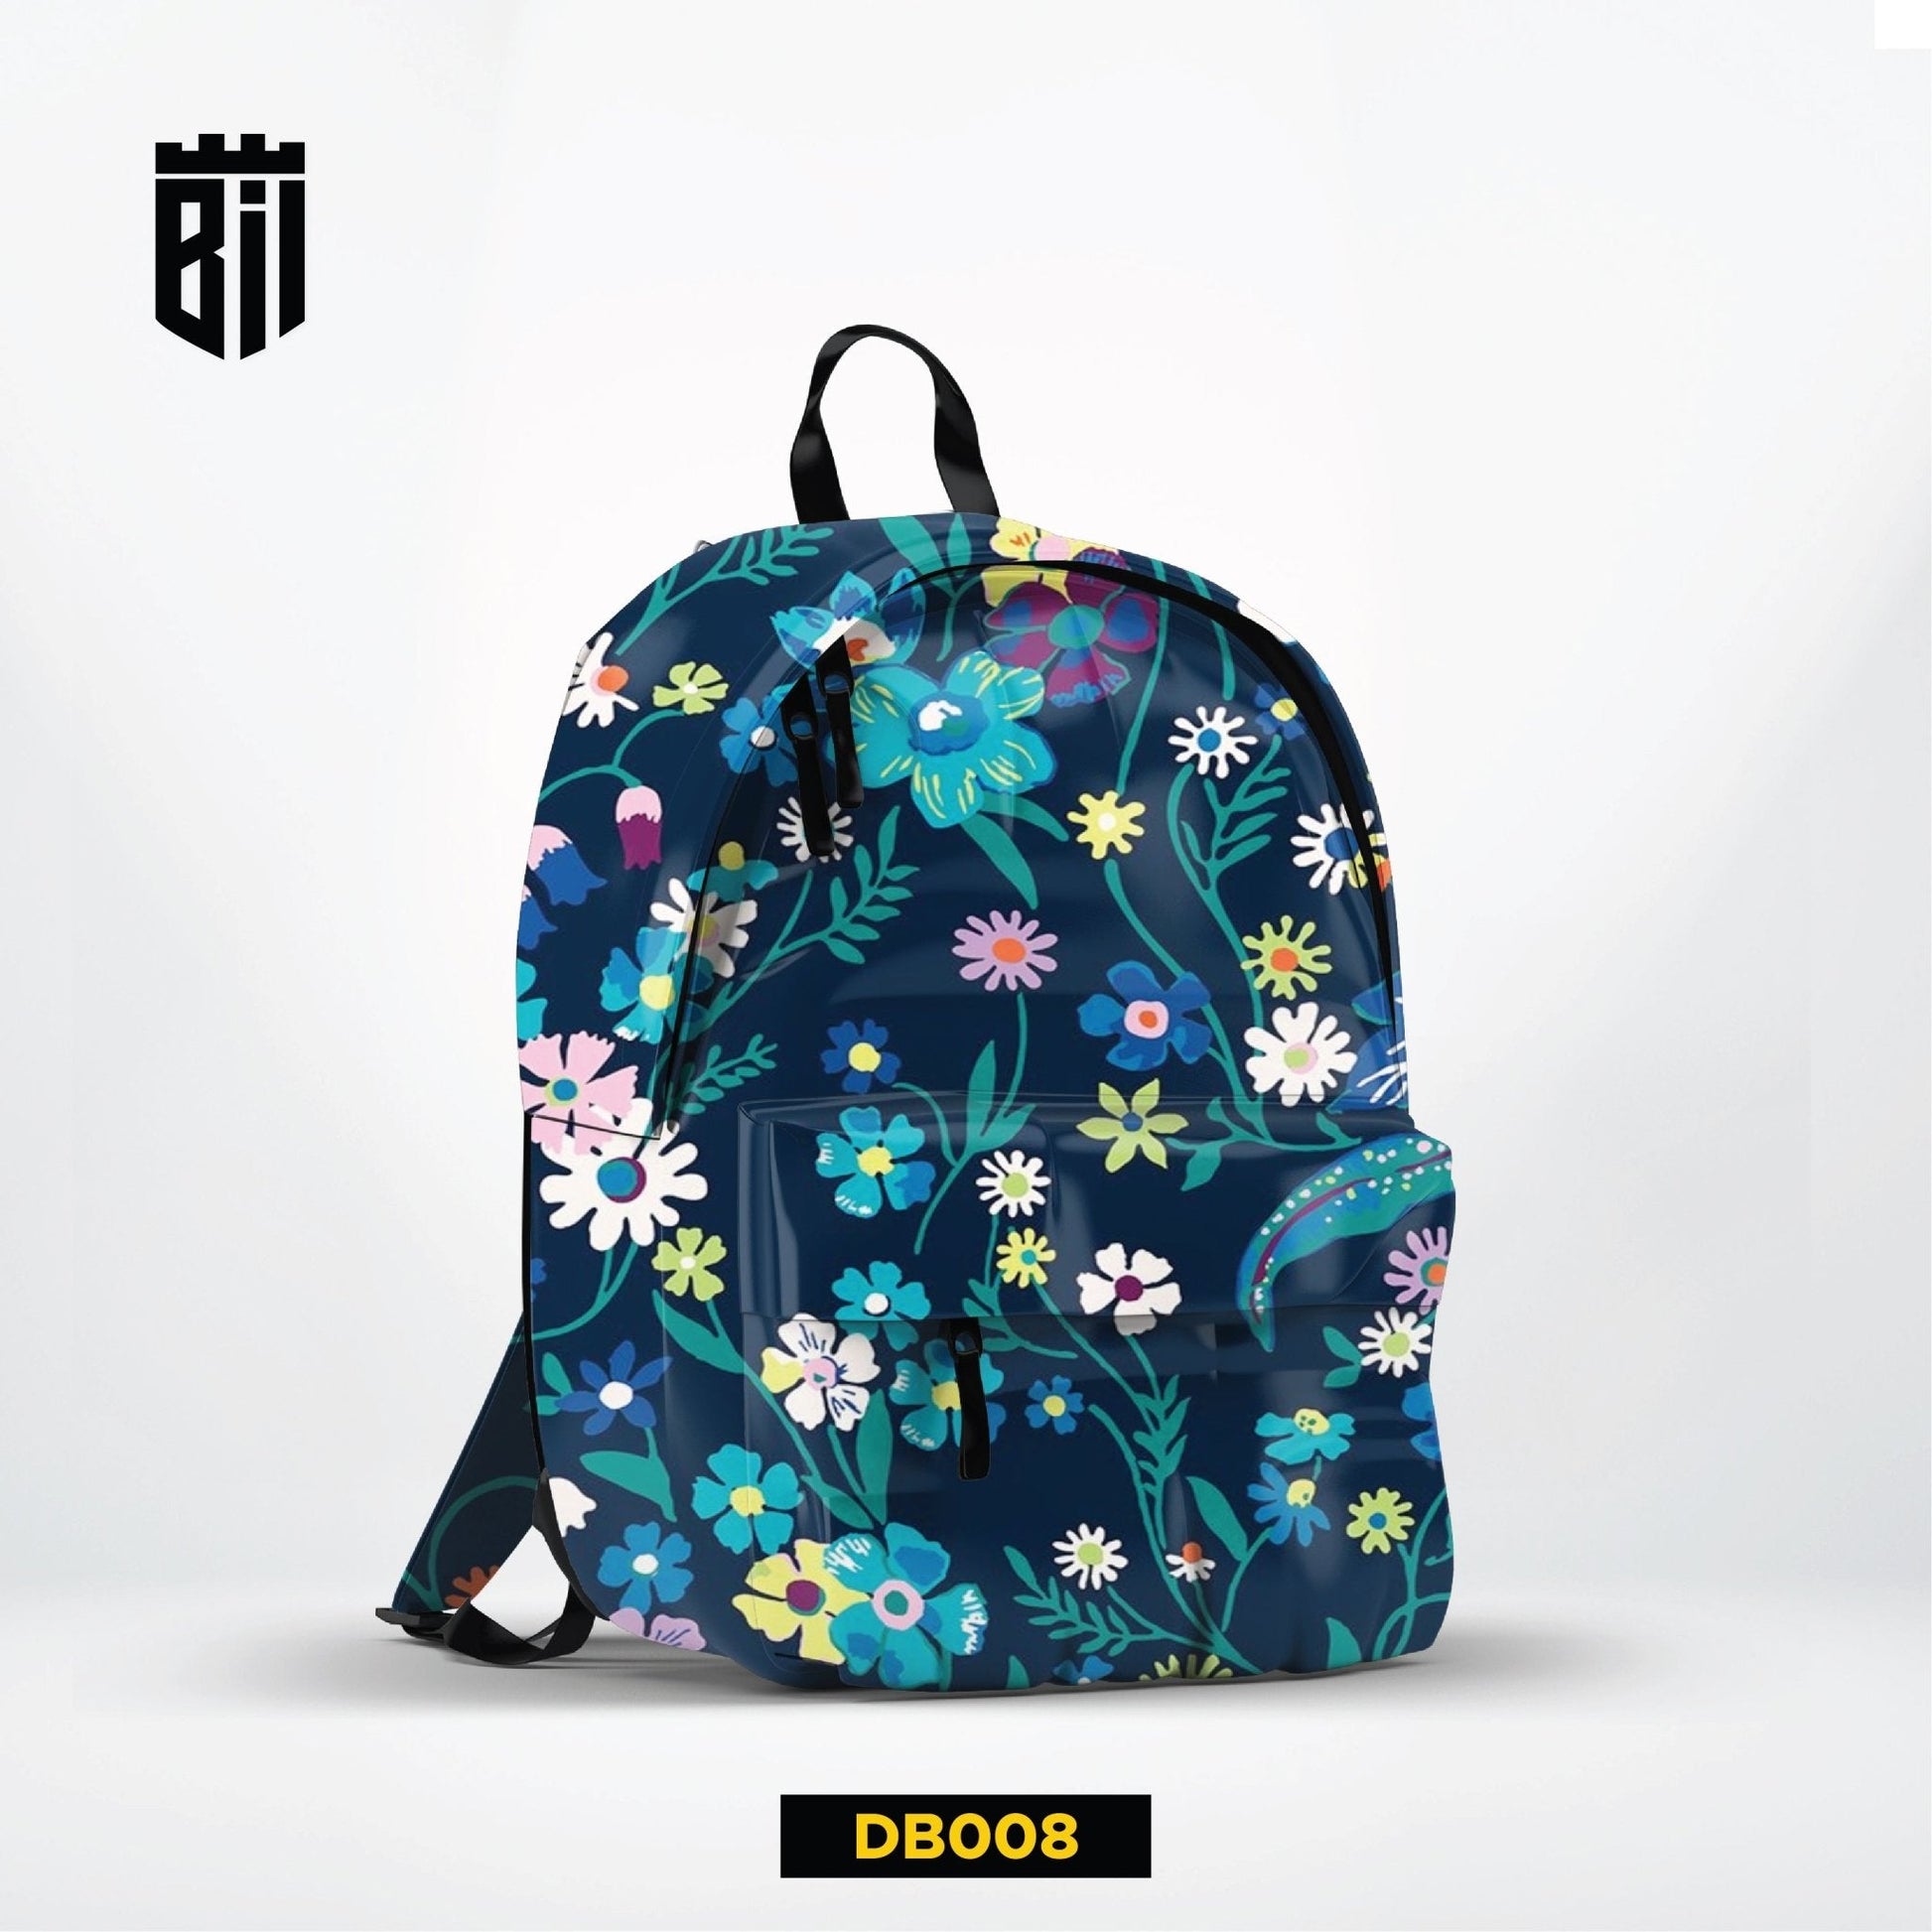 Allover printed girls backpack school bag